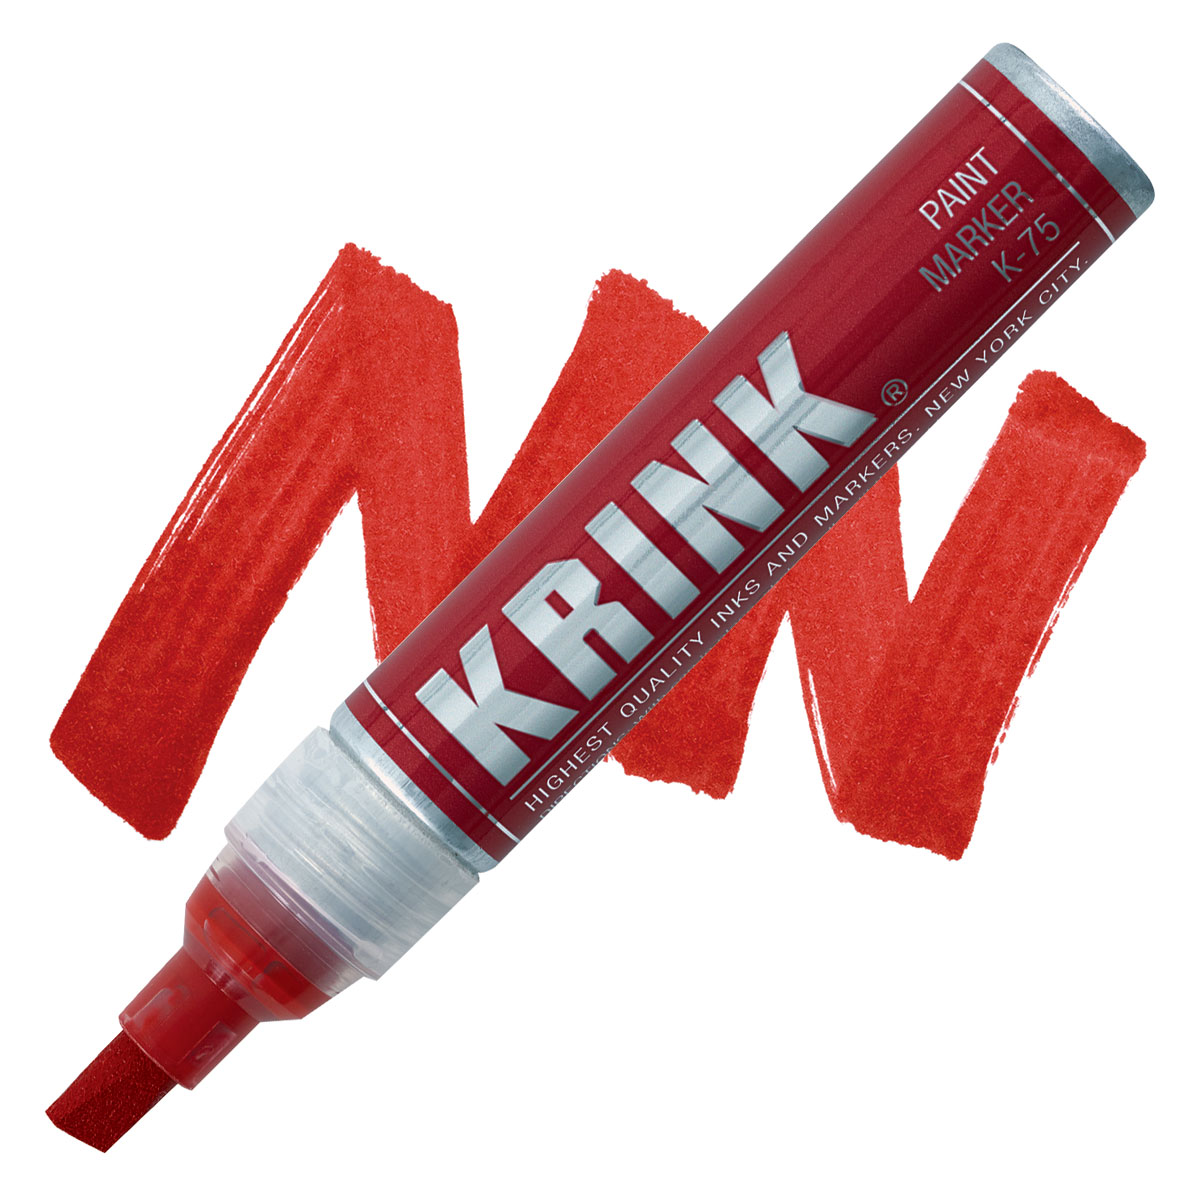 Krink K-75 Alcohol Paint Markers Set of 6, 7mm Chisel Tip